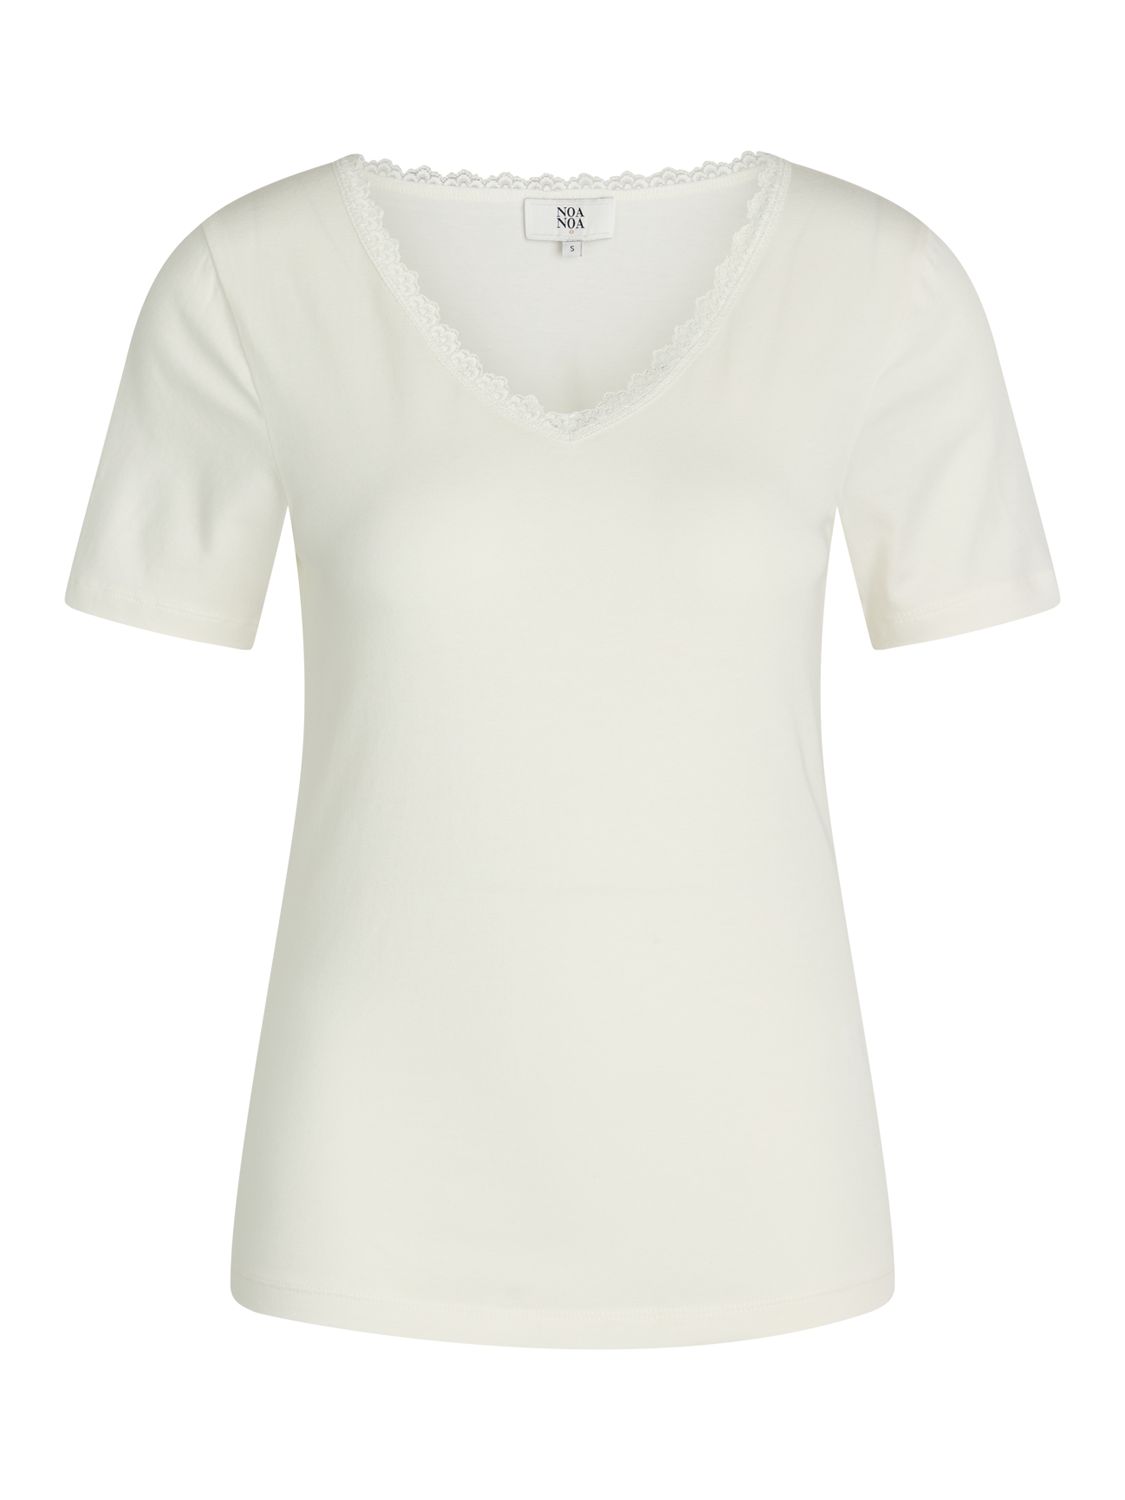 Noa Noa Lyda T-Shirt, White at John Lewis & Partners